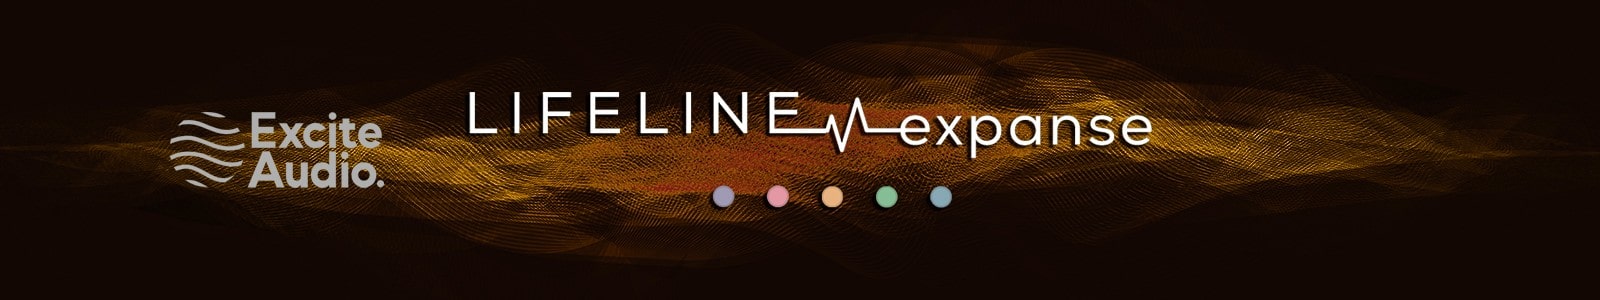 Lifeline Expanse Lite by Excite Audio